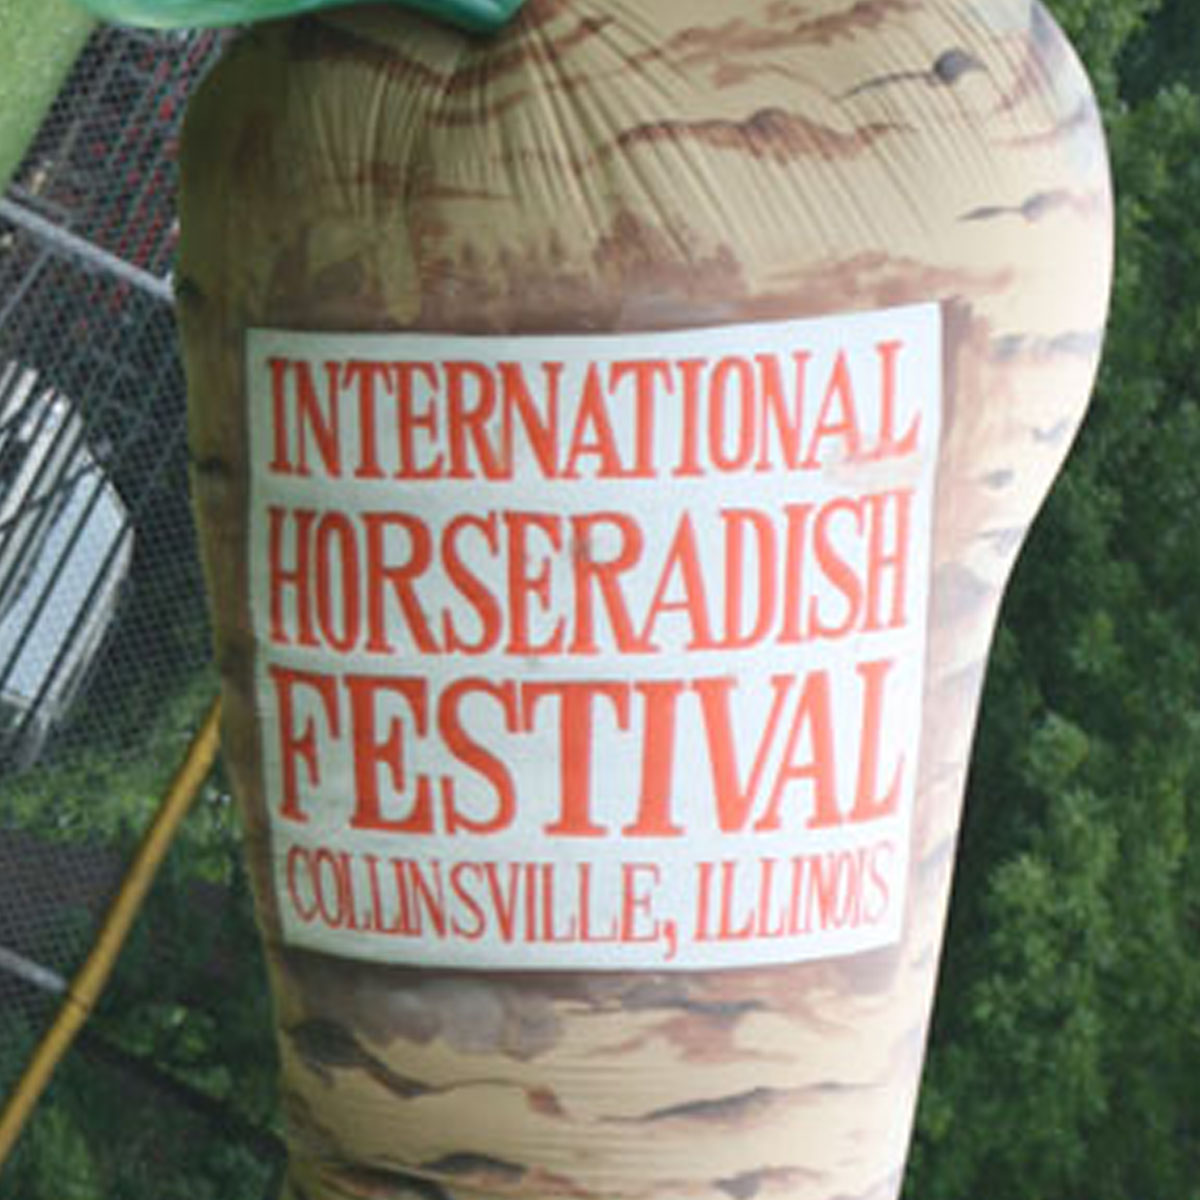 Collinsville Horseradish Festival